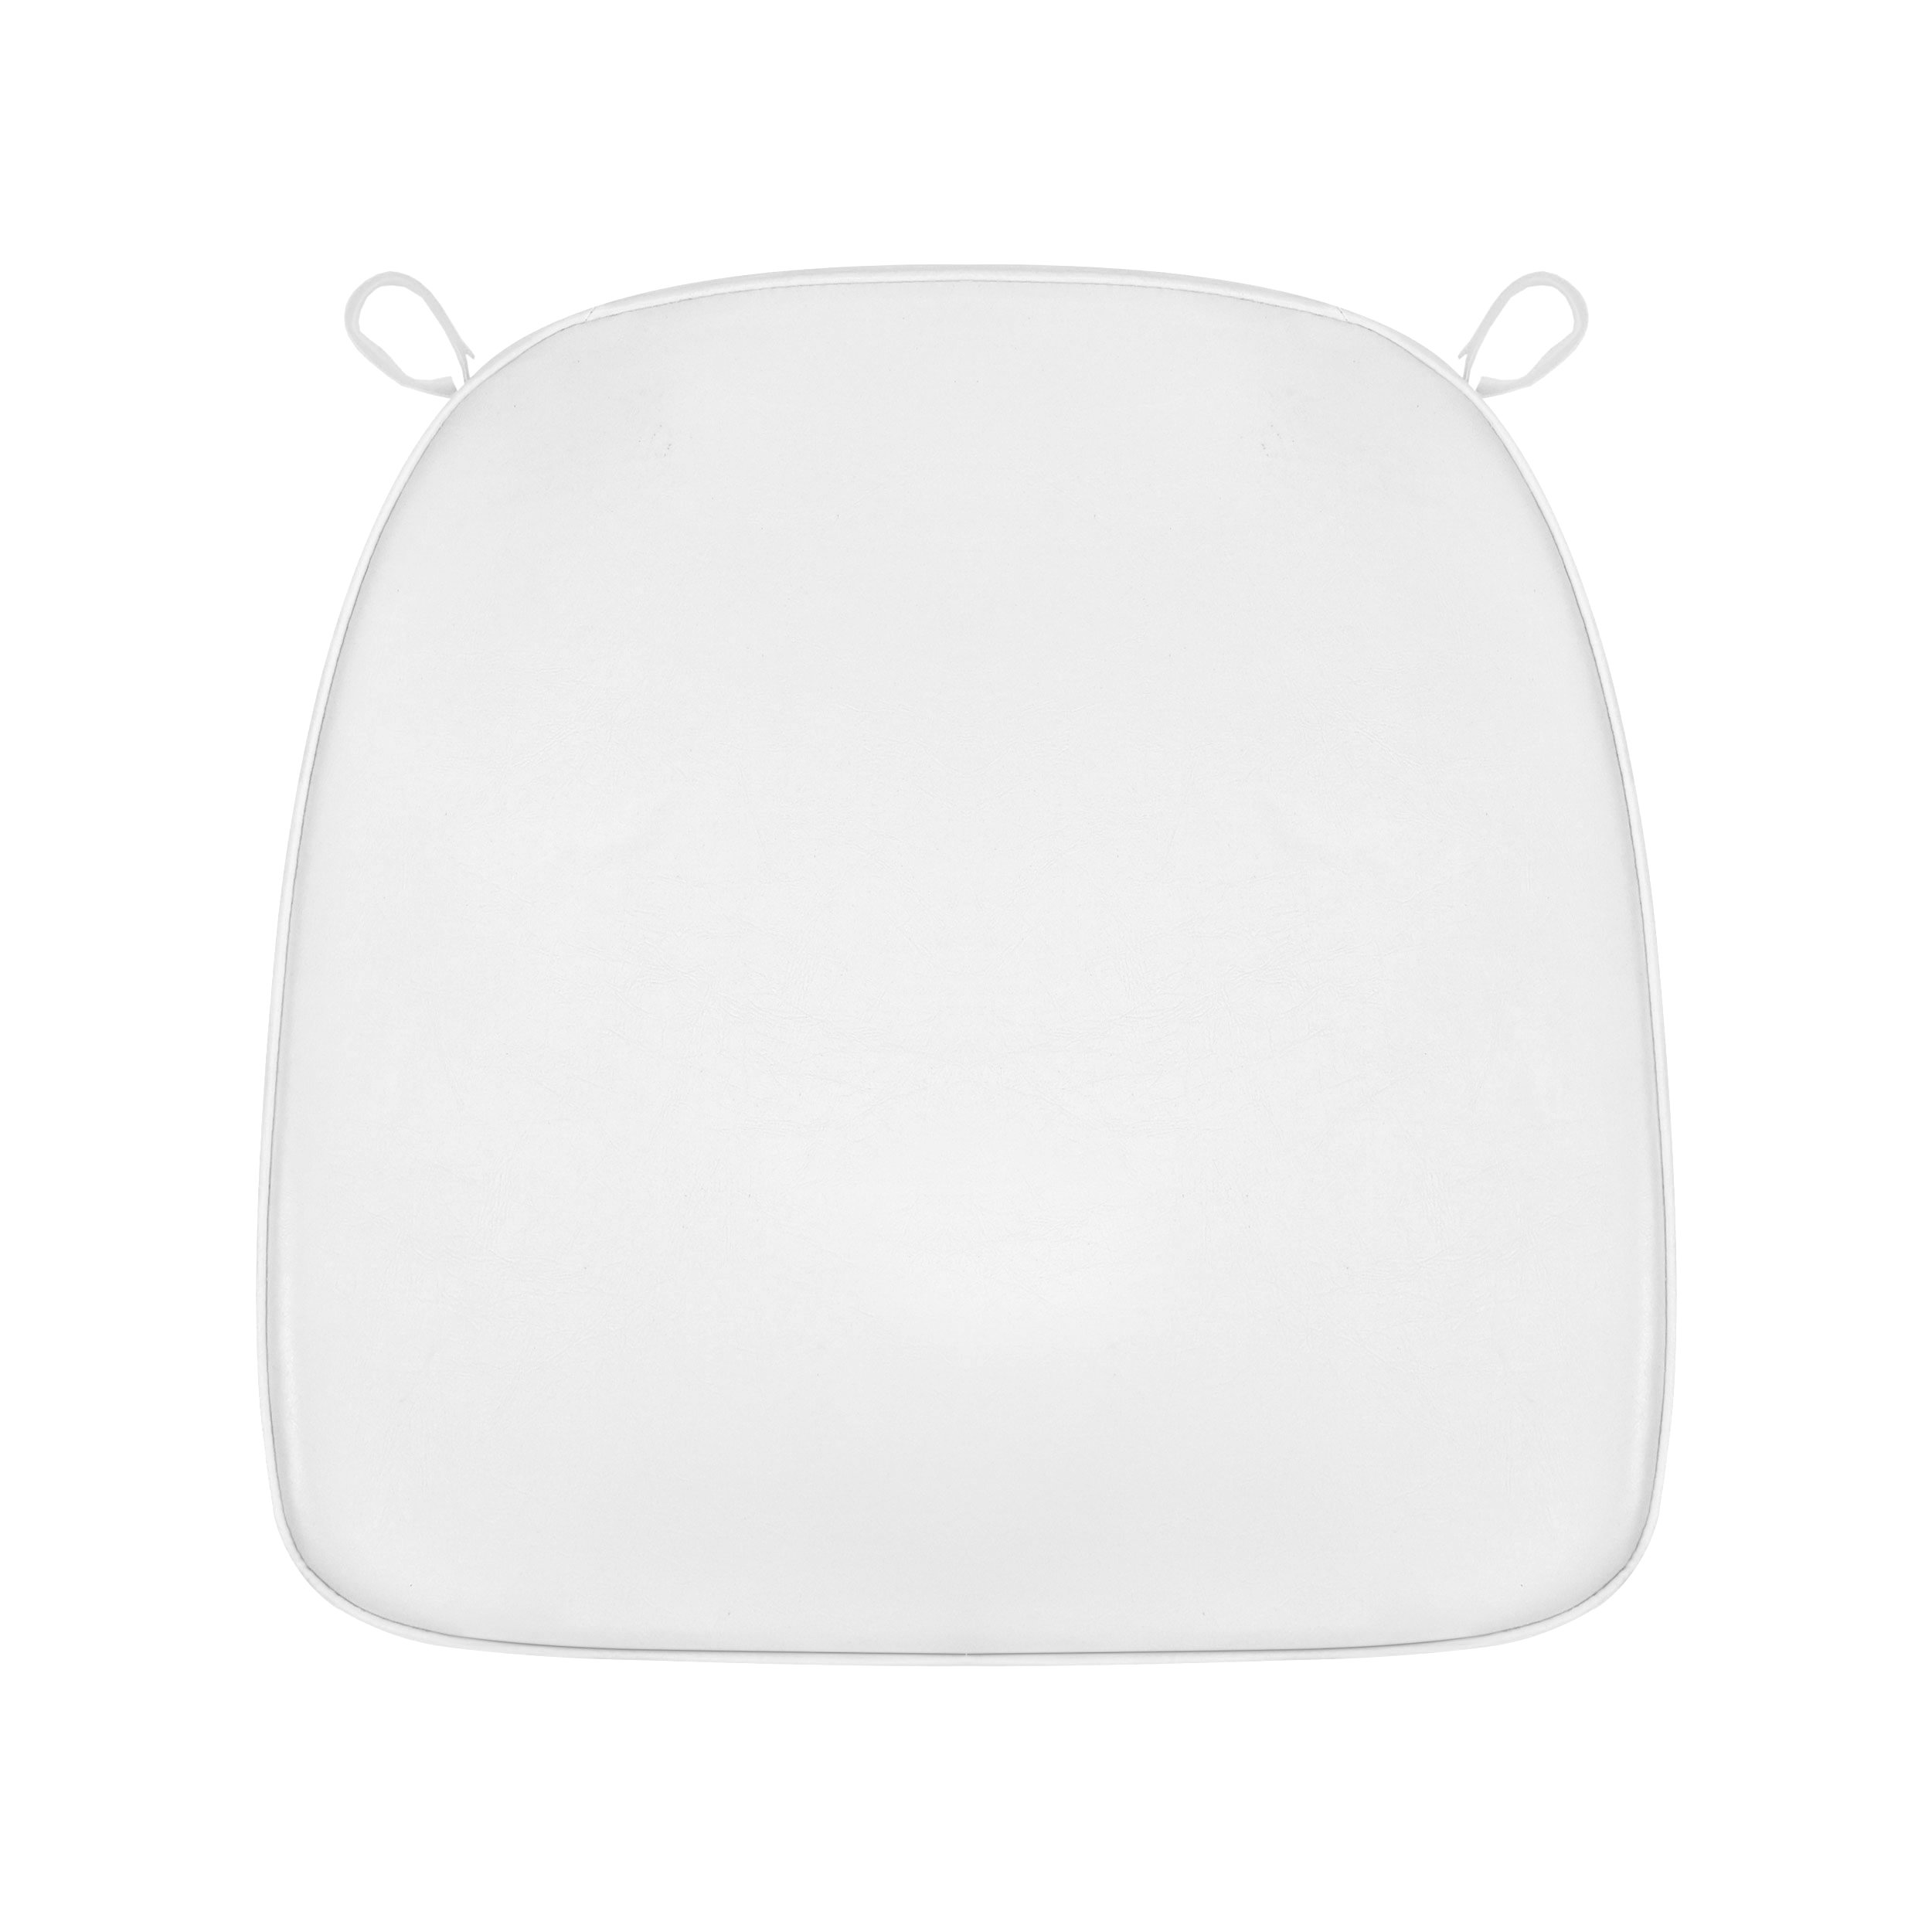 2" White "High Density" Velcro Strap Chiavari Chair Cushion